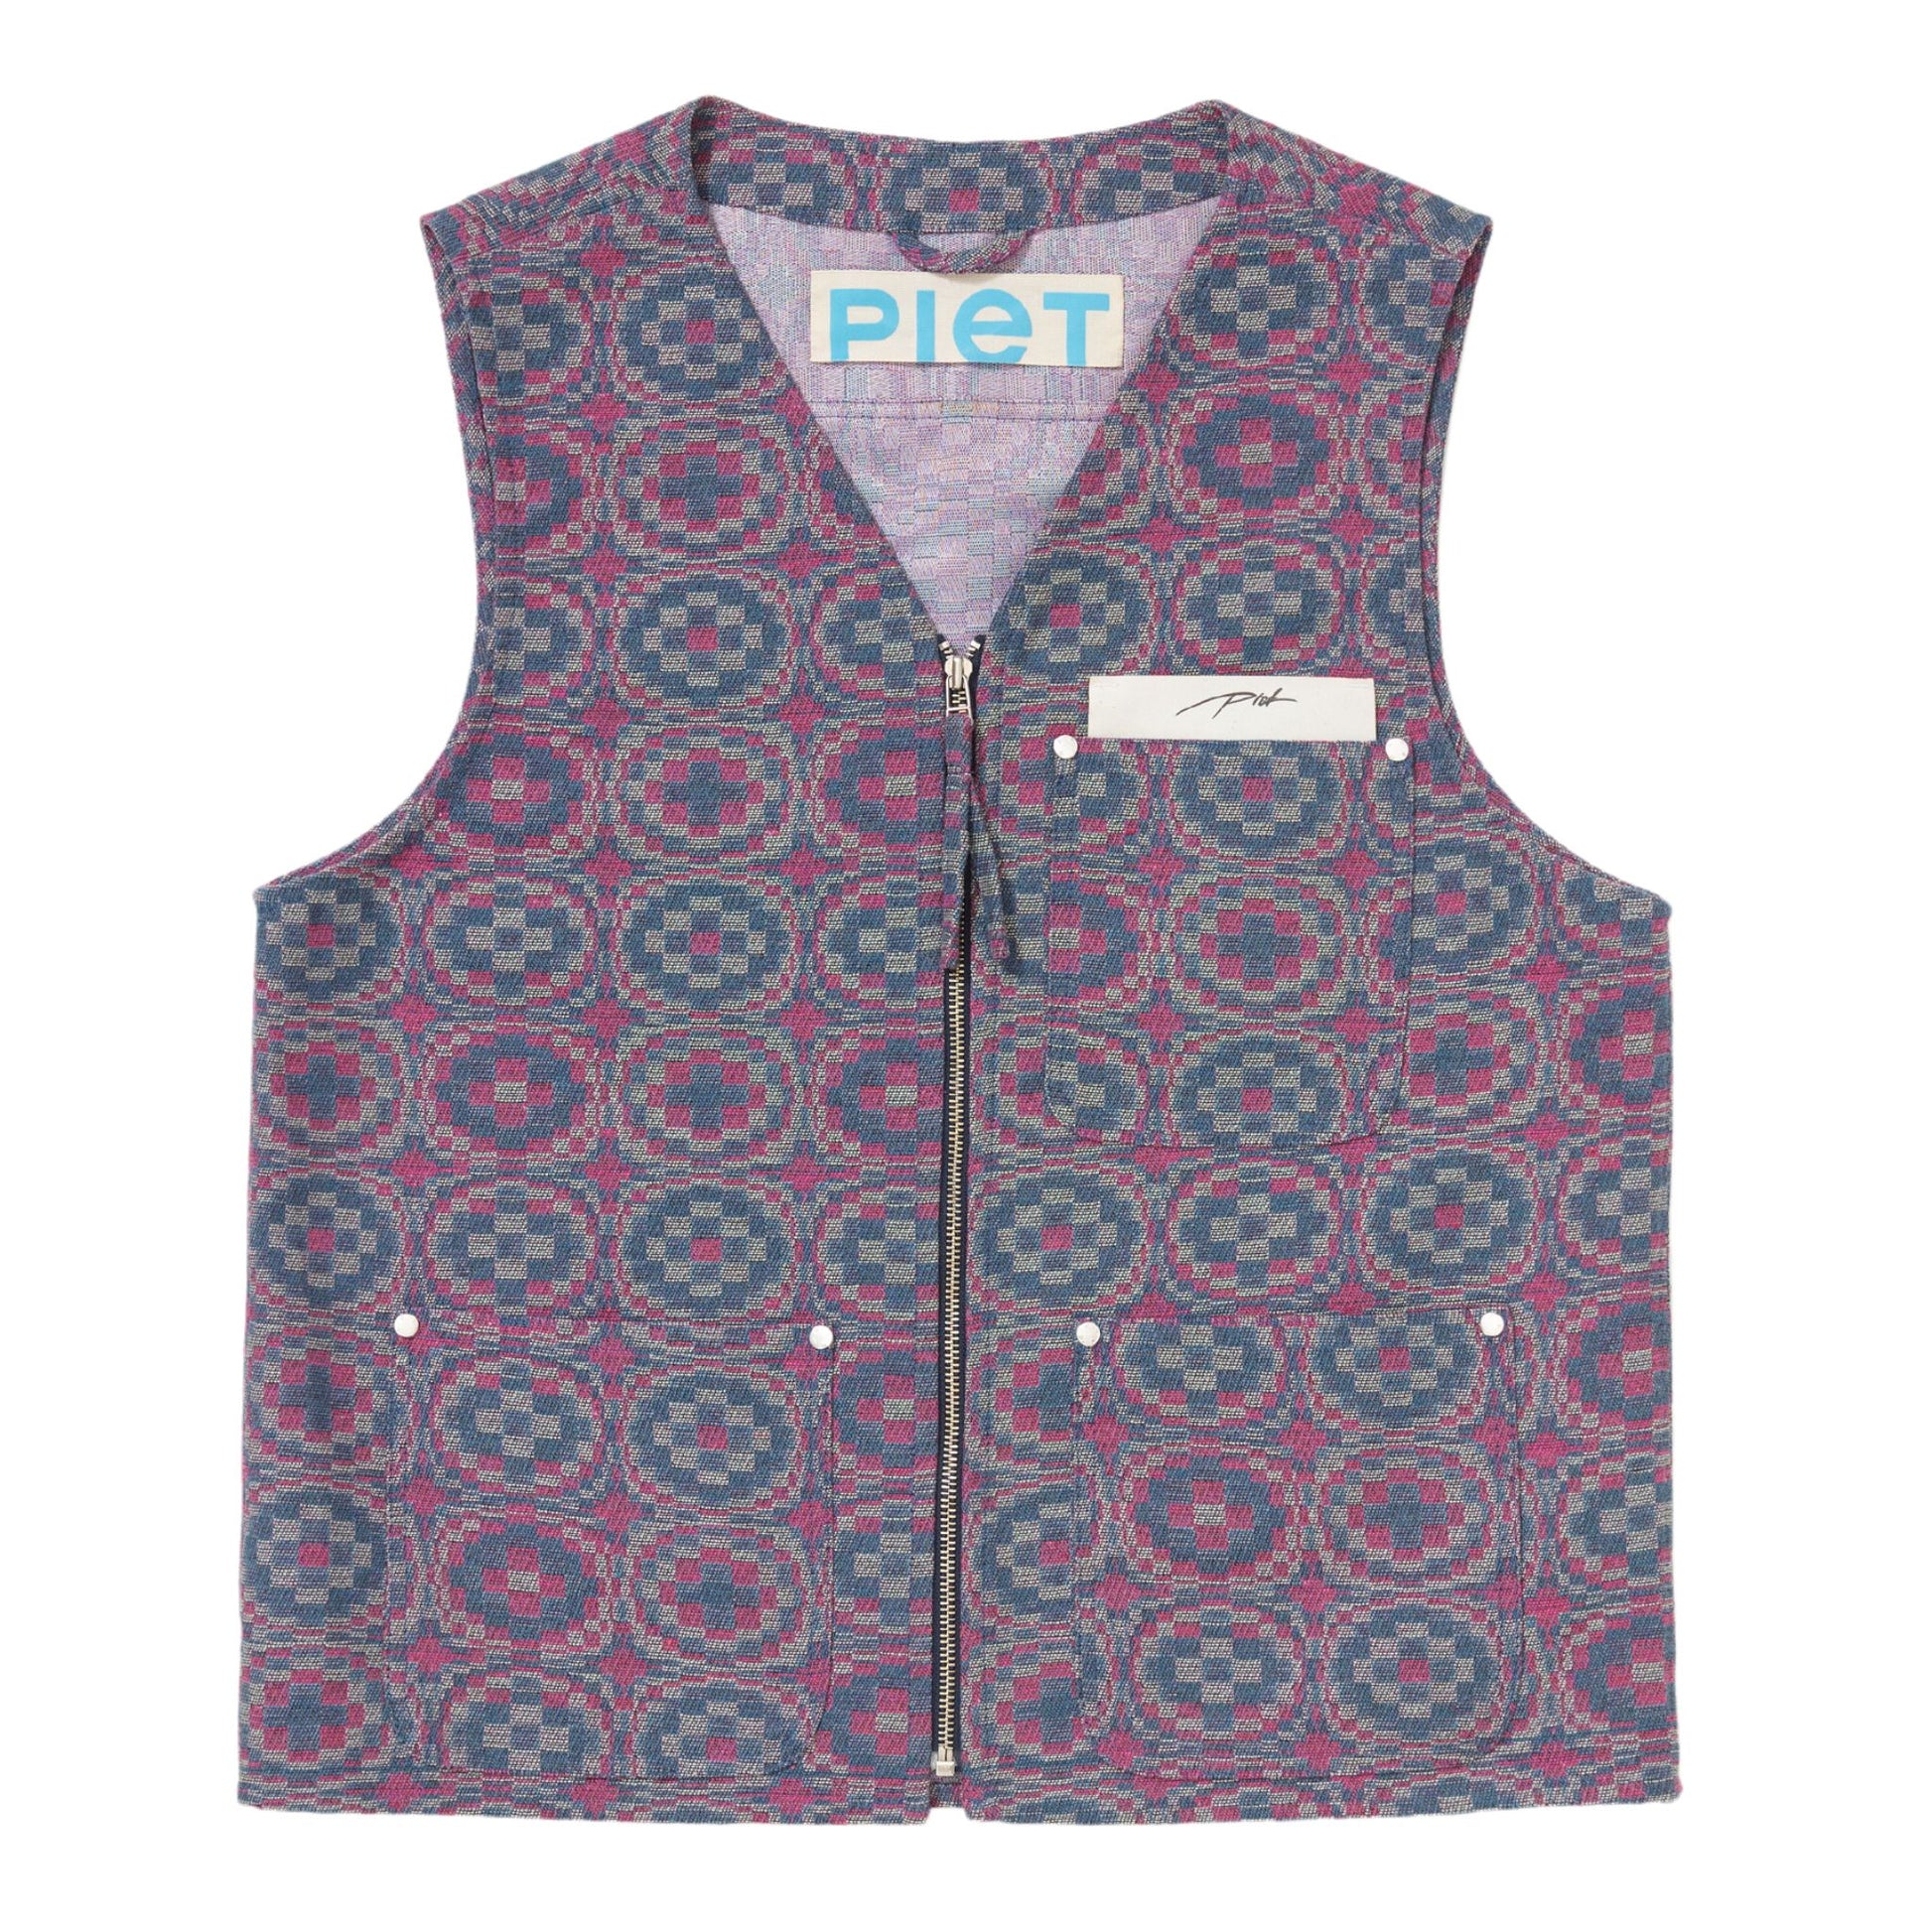 PIET - Jacquard Psy Vest - THE GAME